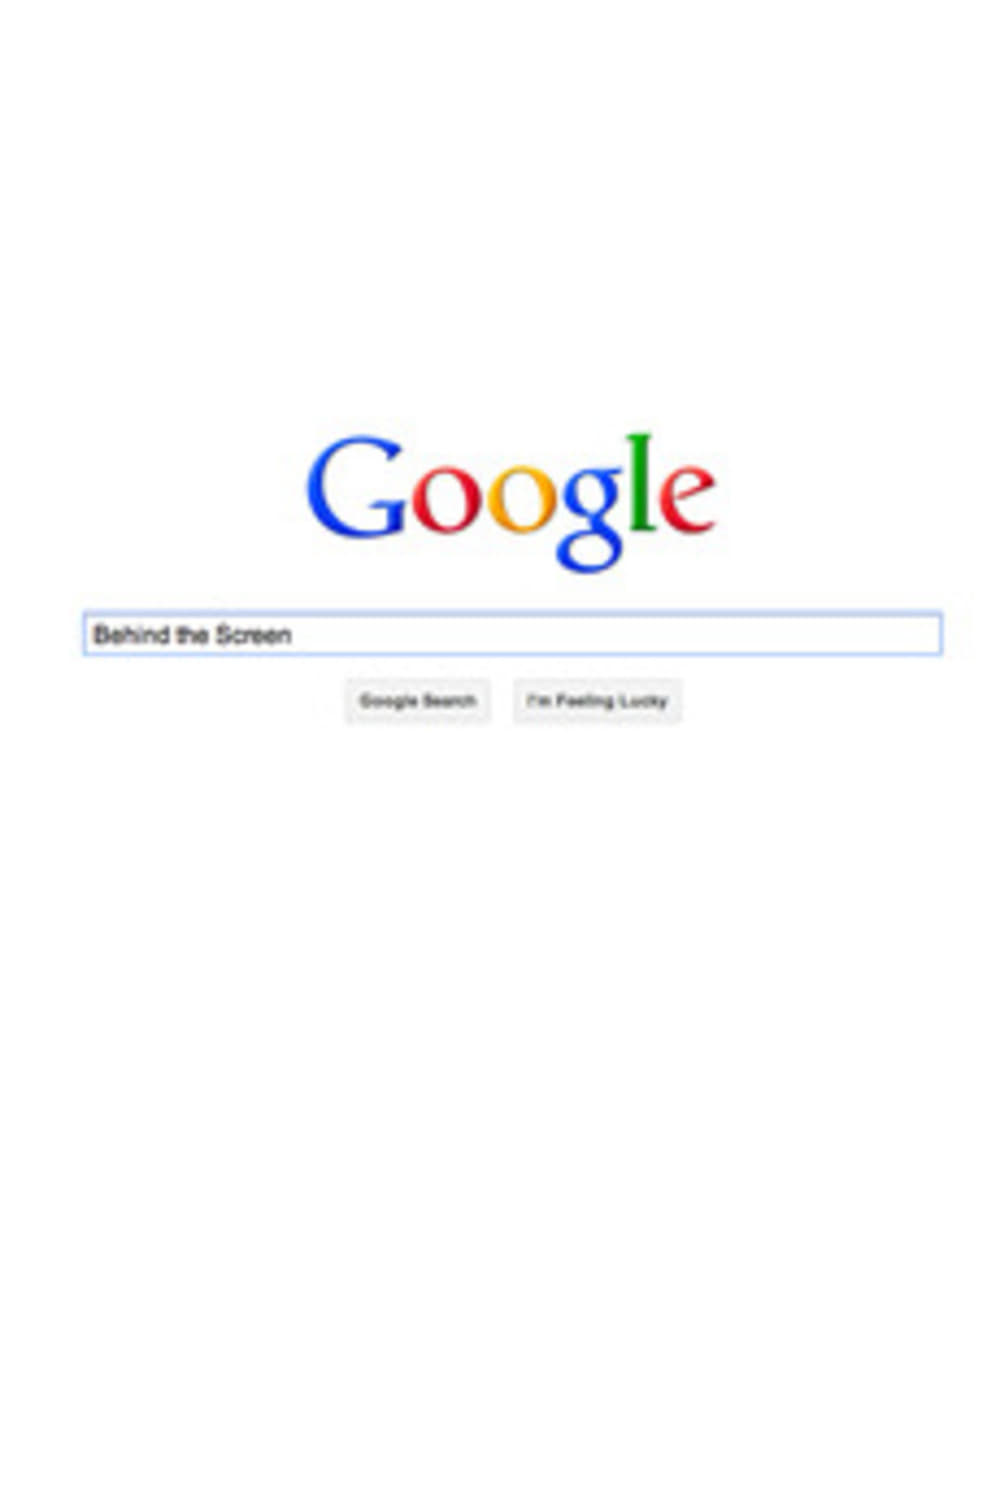 Google: Behind the Screen